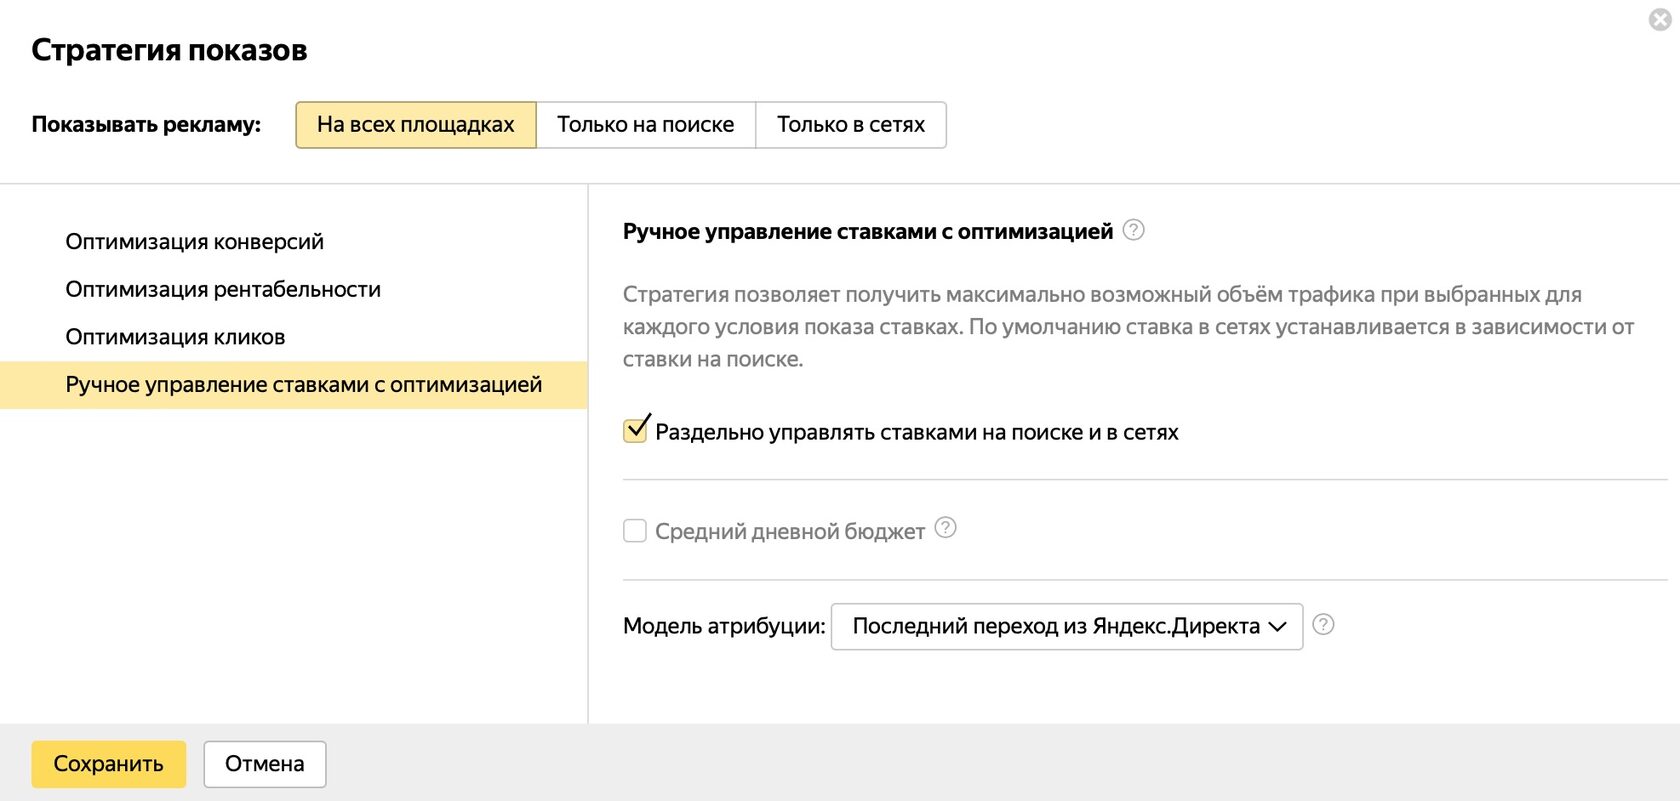 Модель атрибуции Яндекс директ